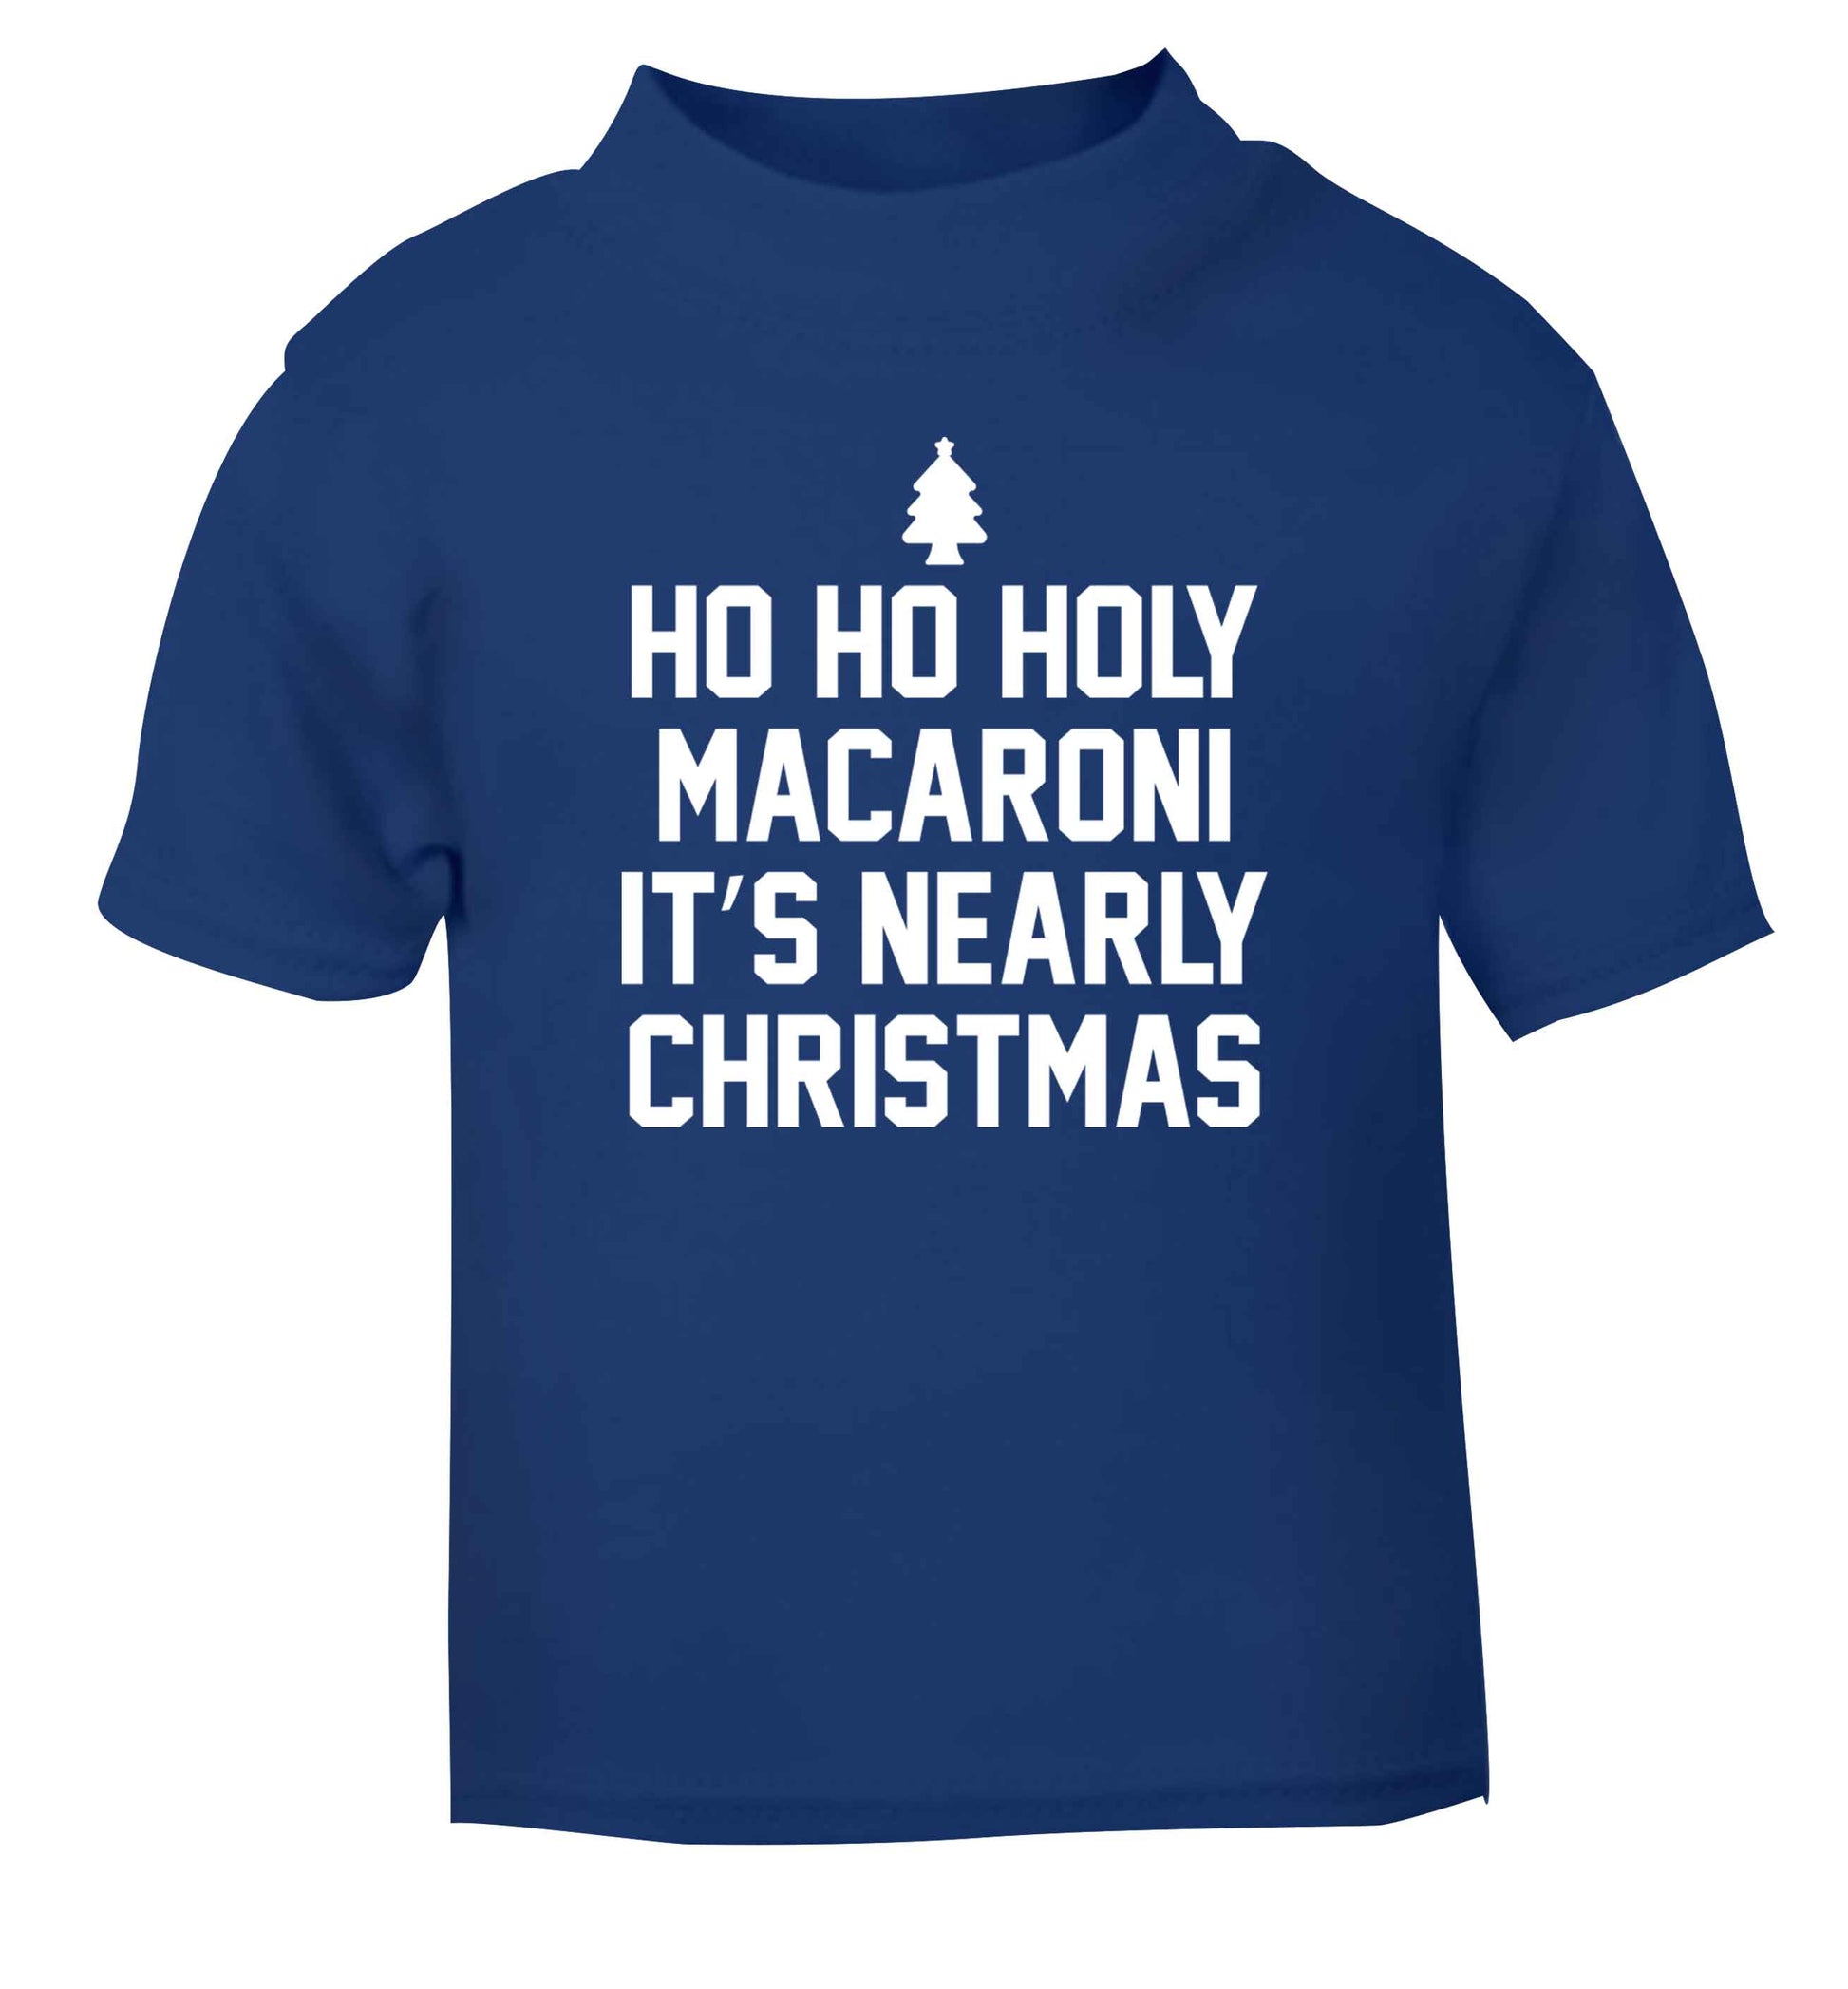 Ho ho holy macaroni it's nearly Christmas blue Baby Toddler Tshirt 2 Years